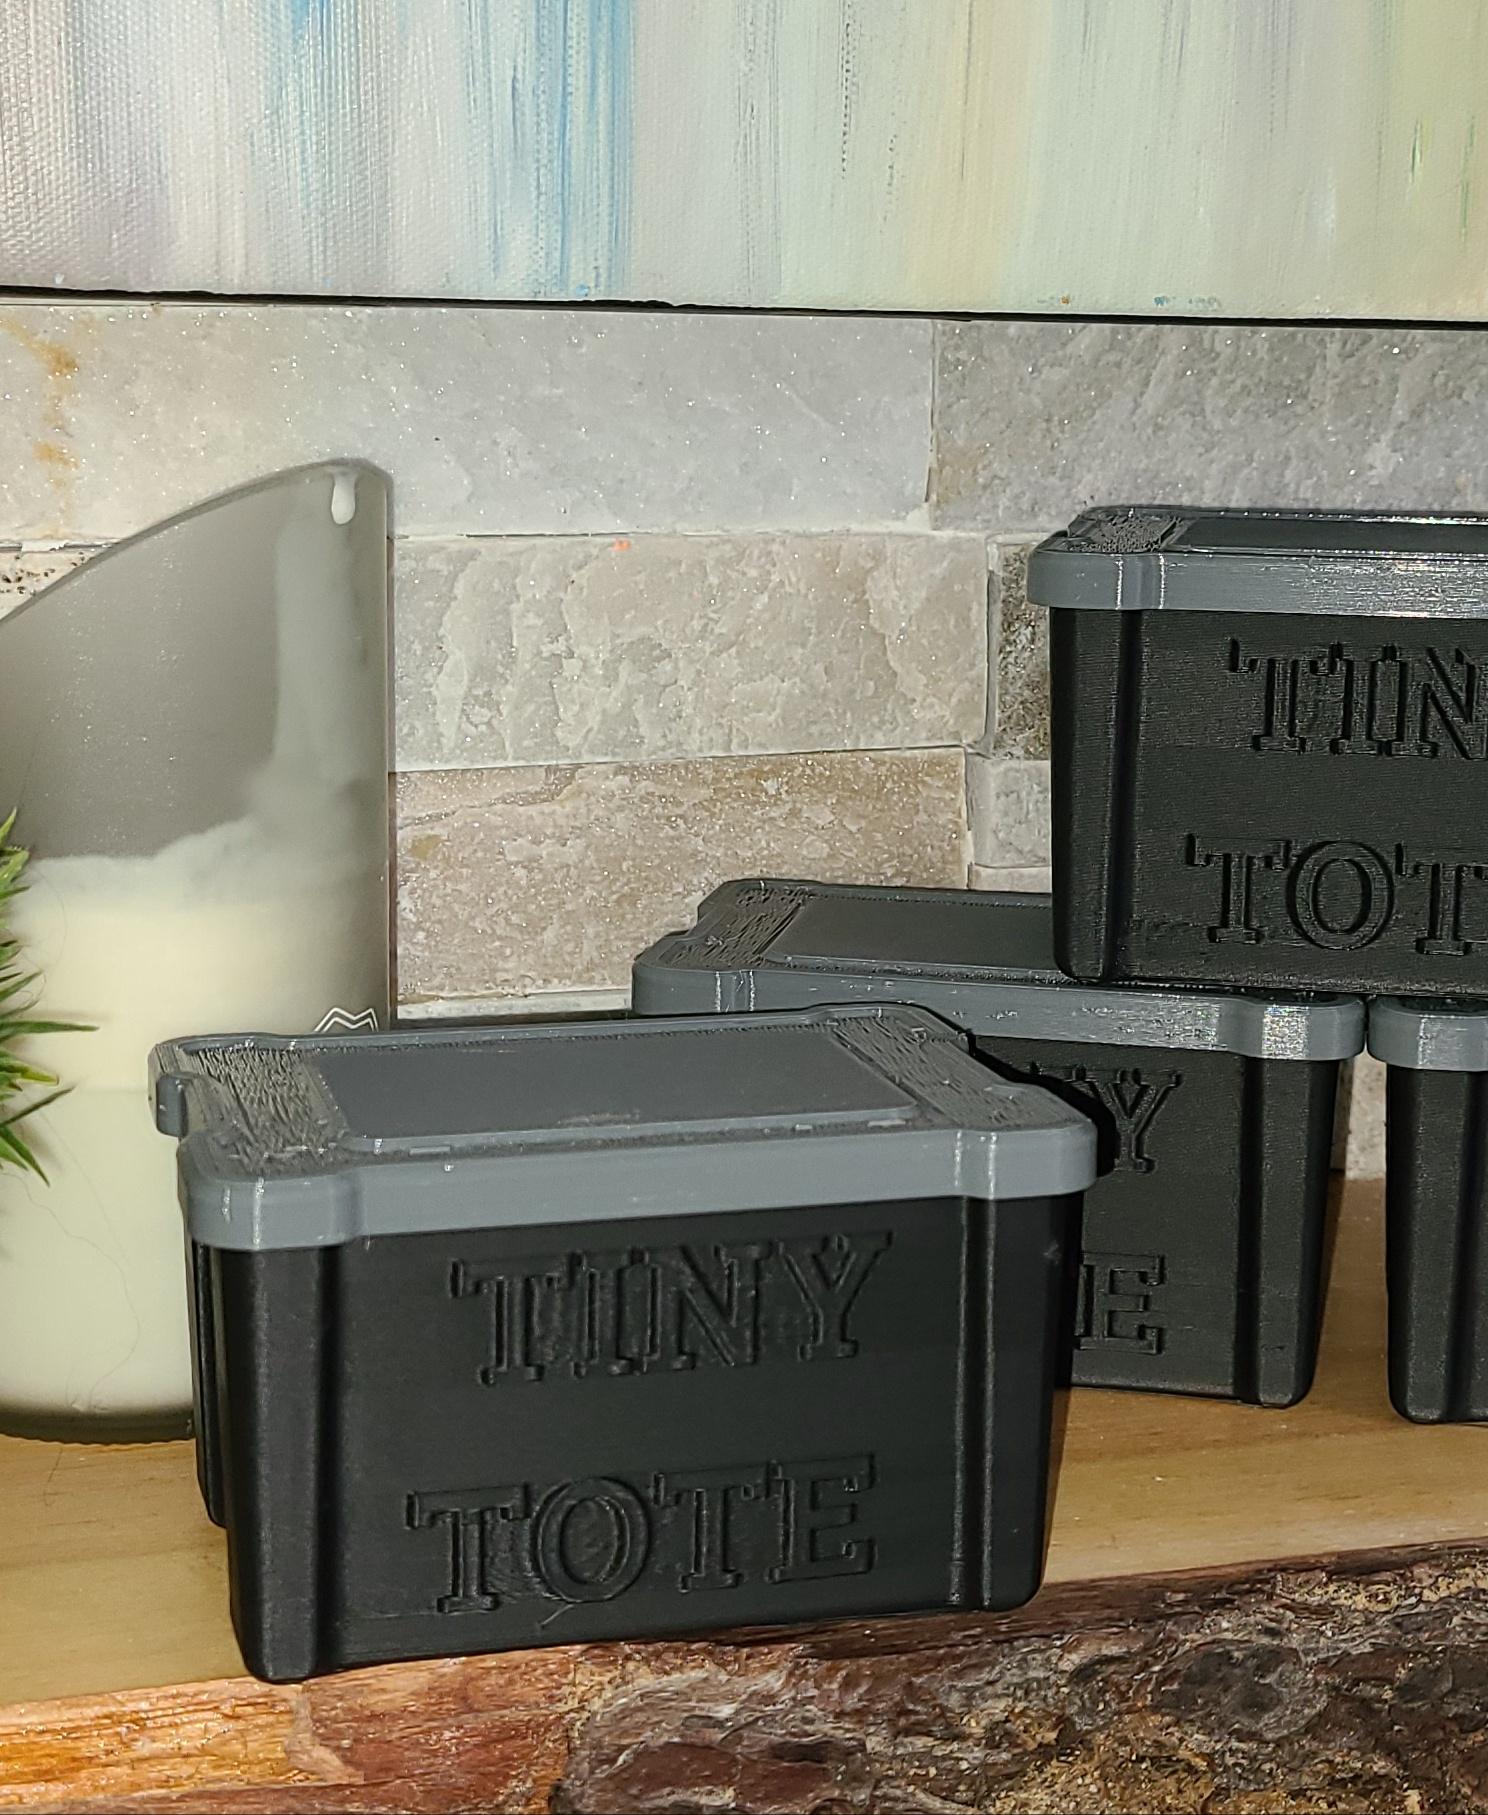 TinyTote Storage Bins 3d model